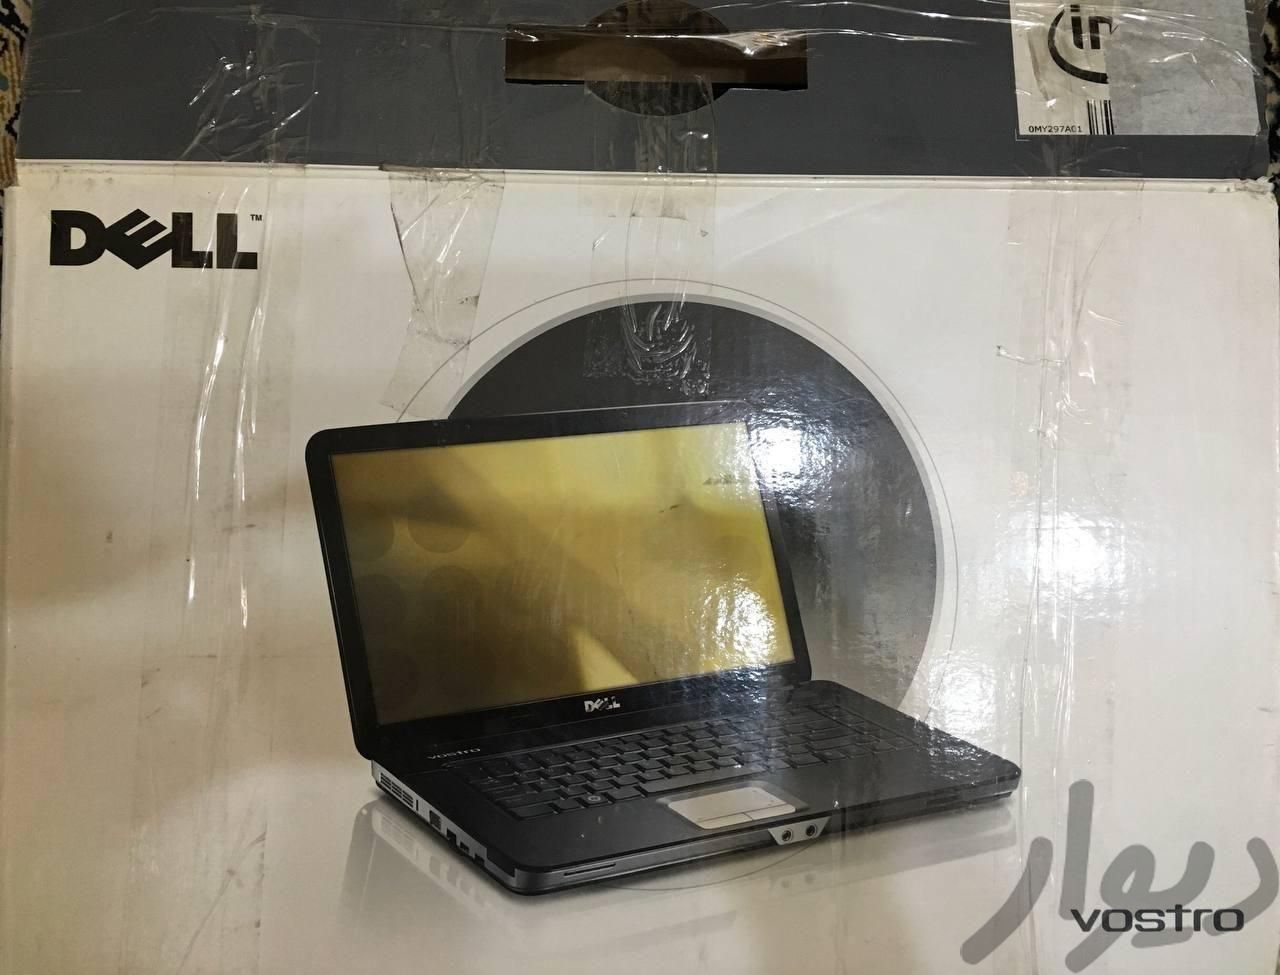 لپ تاپ دل|رایانه همراه|تهران, پیروزی|دیوار